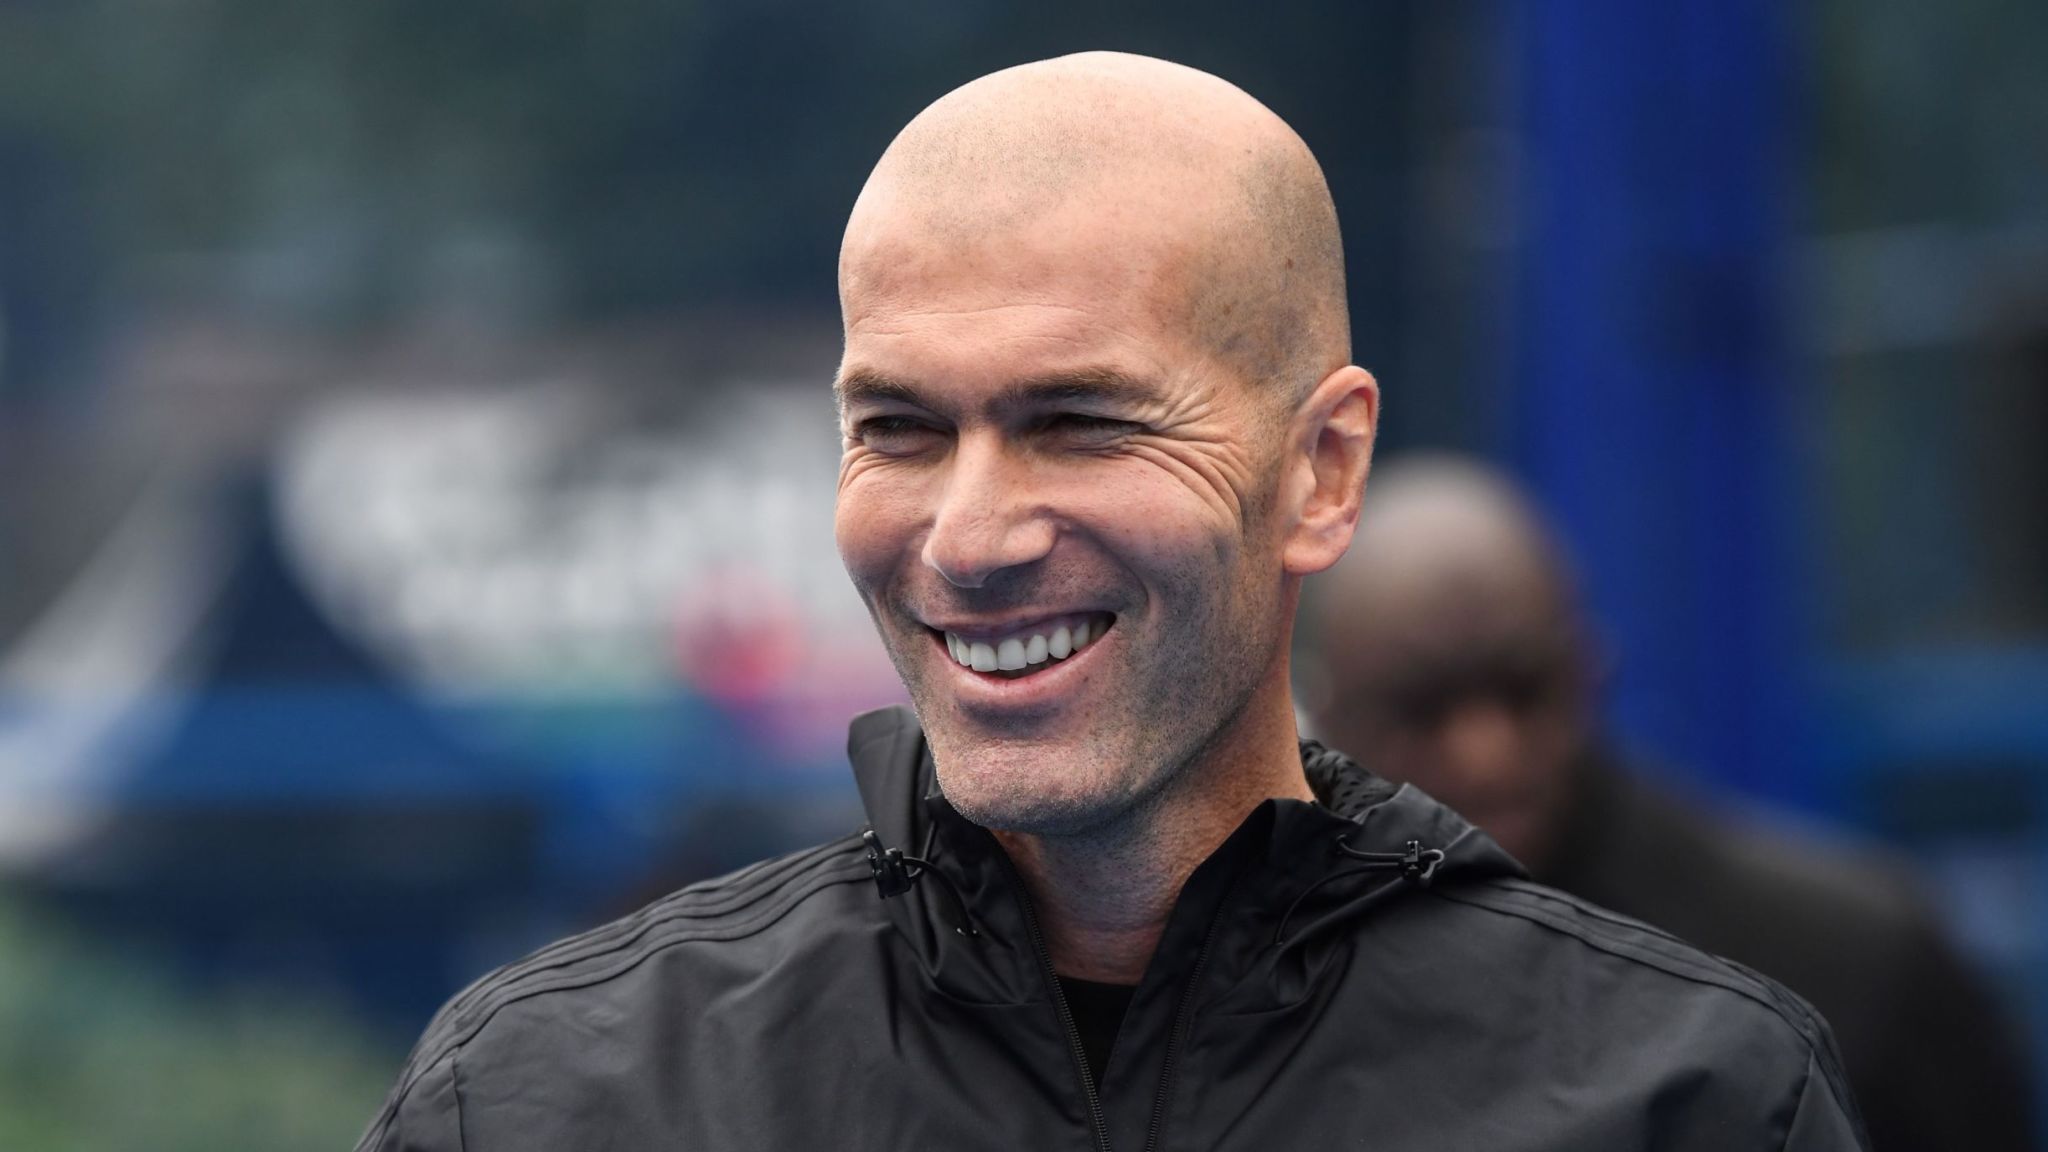 Zinedine Zidane Resmi Jadi Manajer Real Madrid